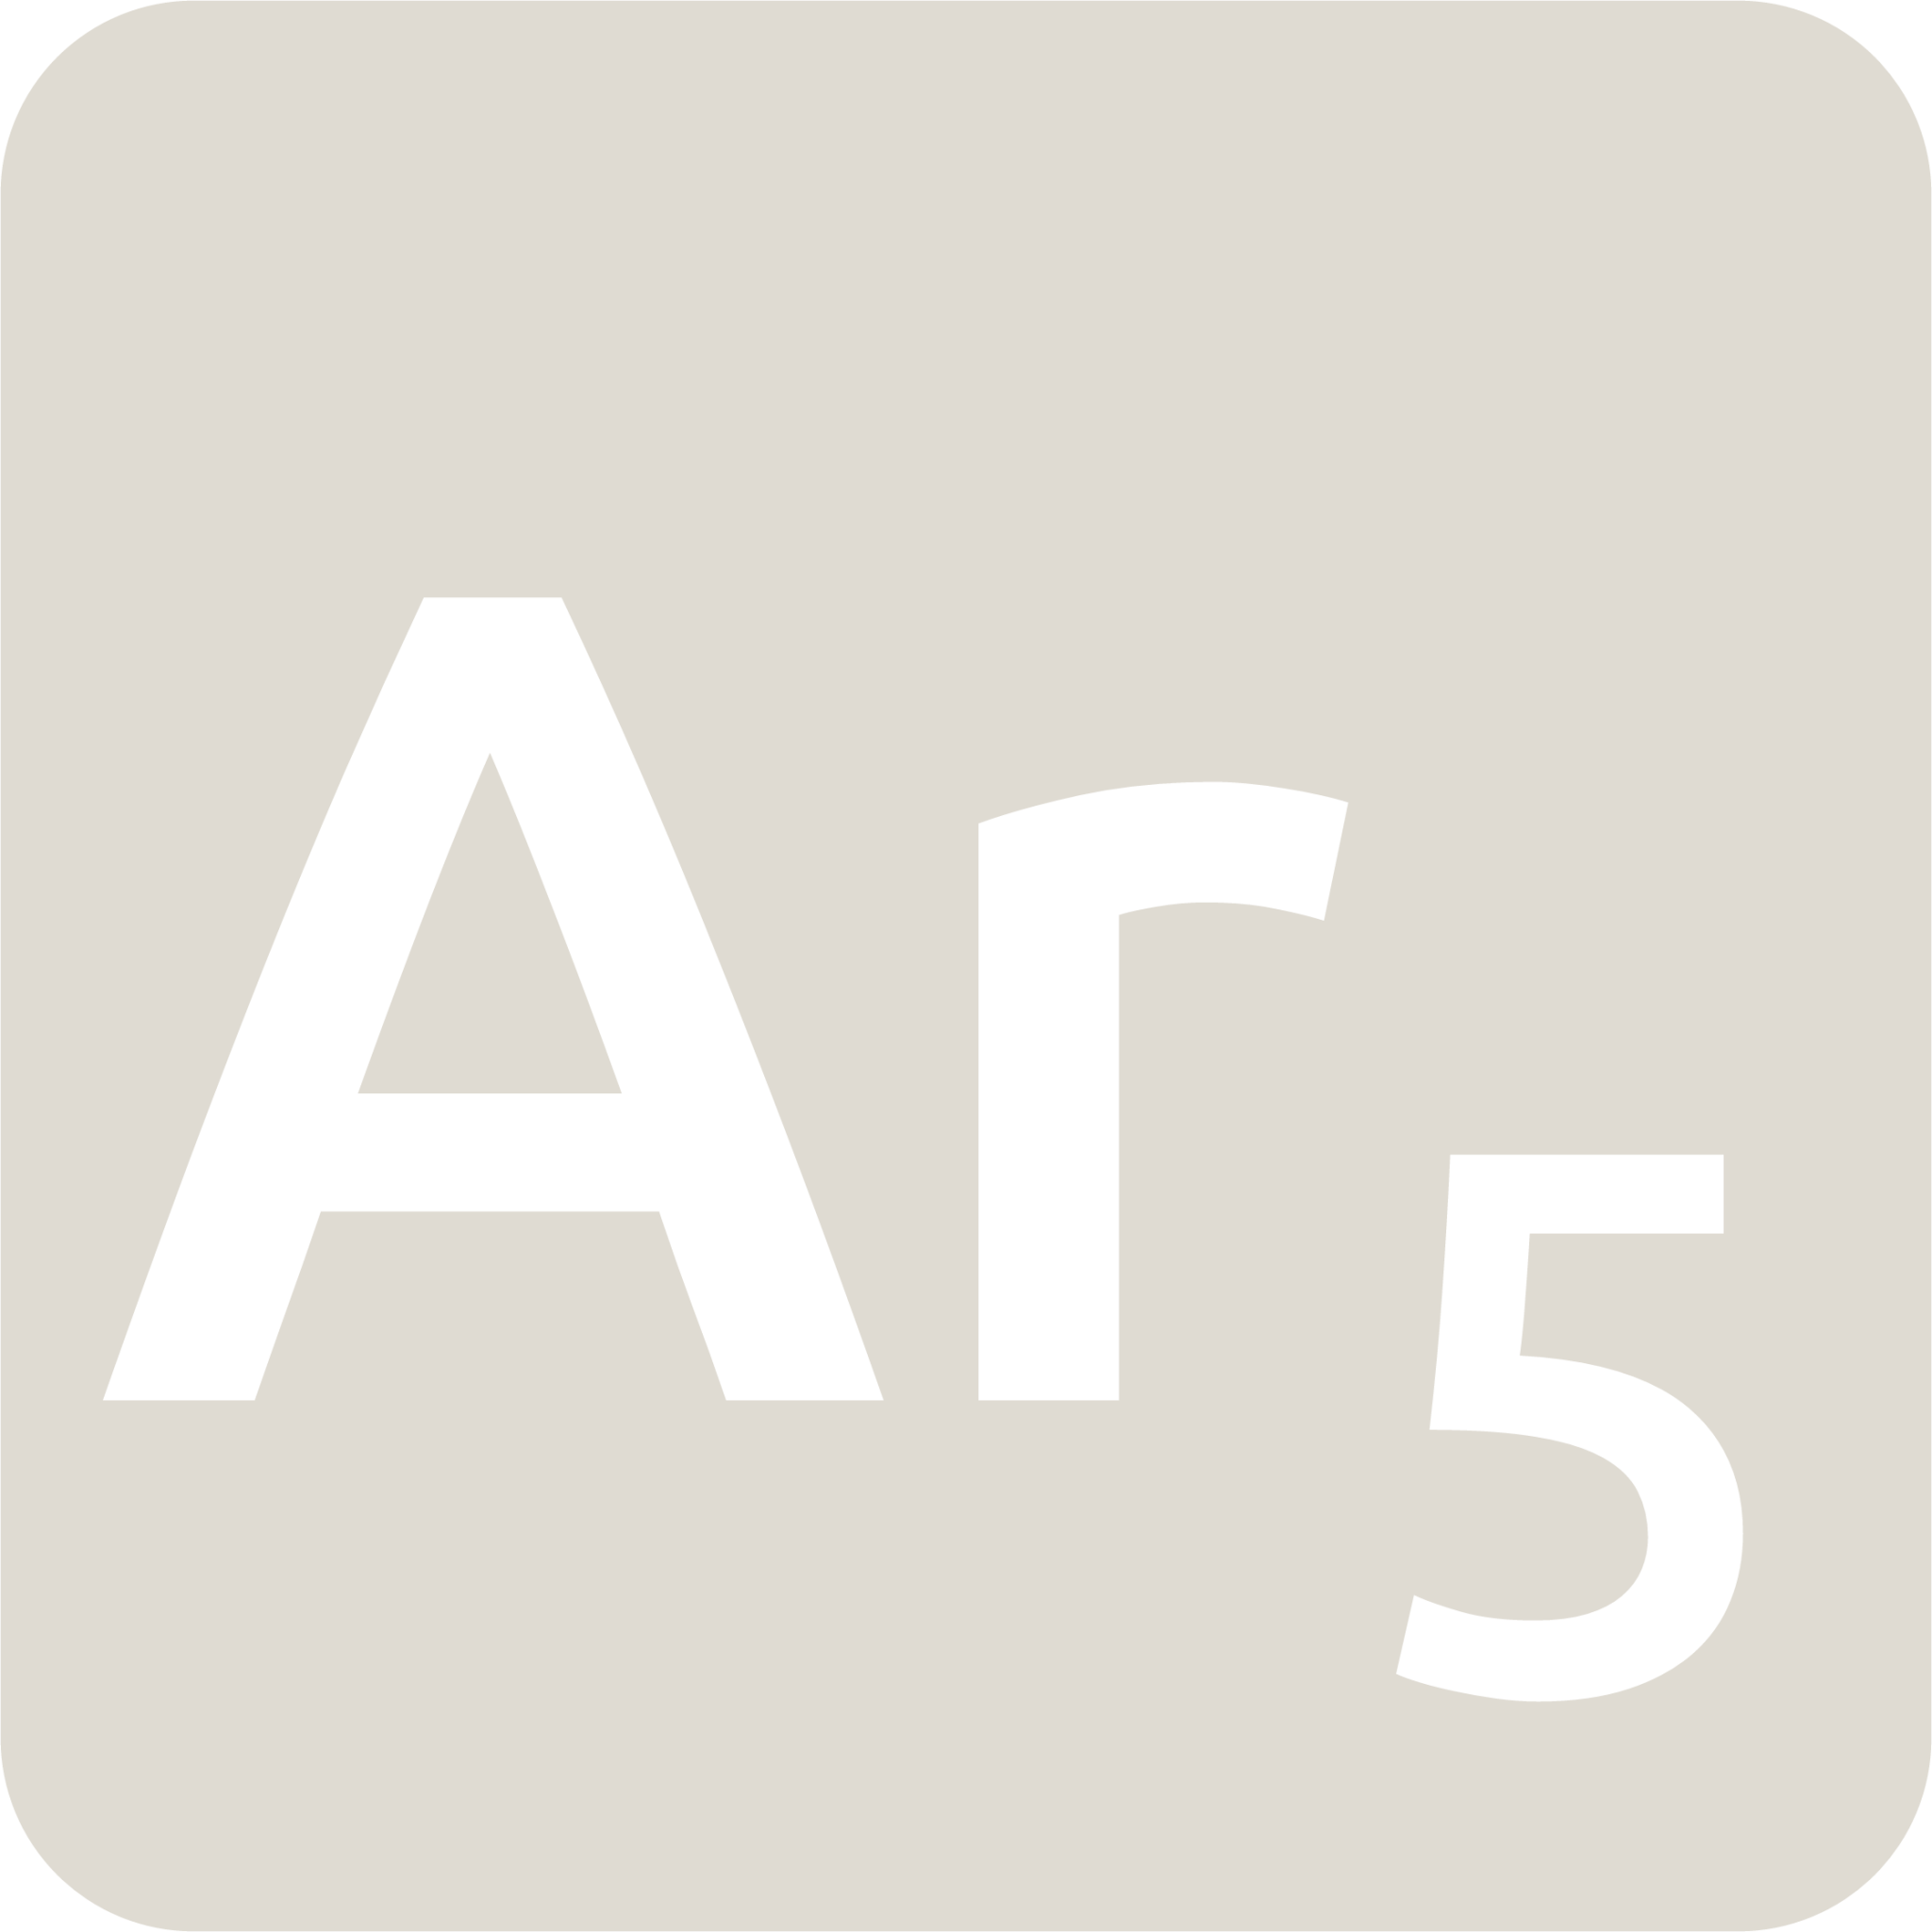 indicator keyboard Ar 5 icon